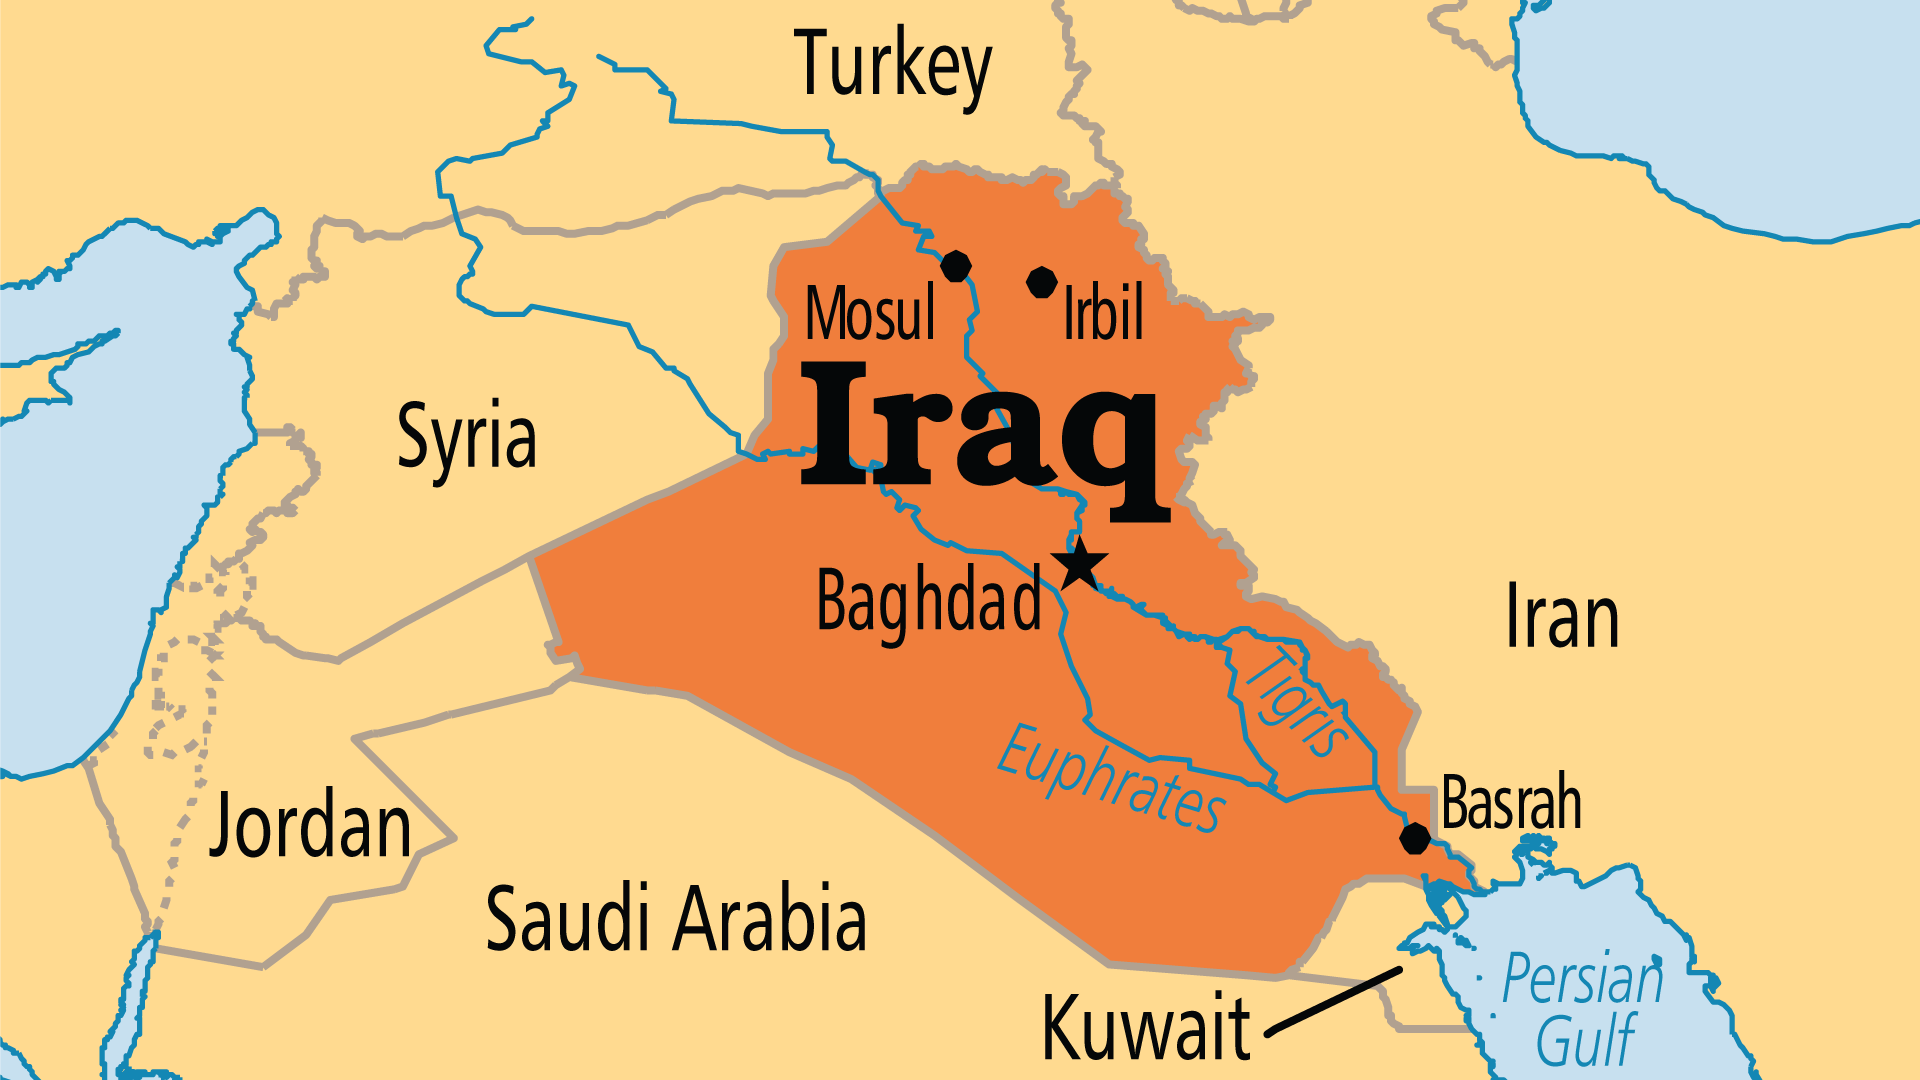 Iraq (Operation World)